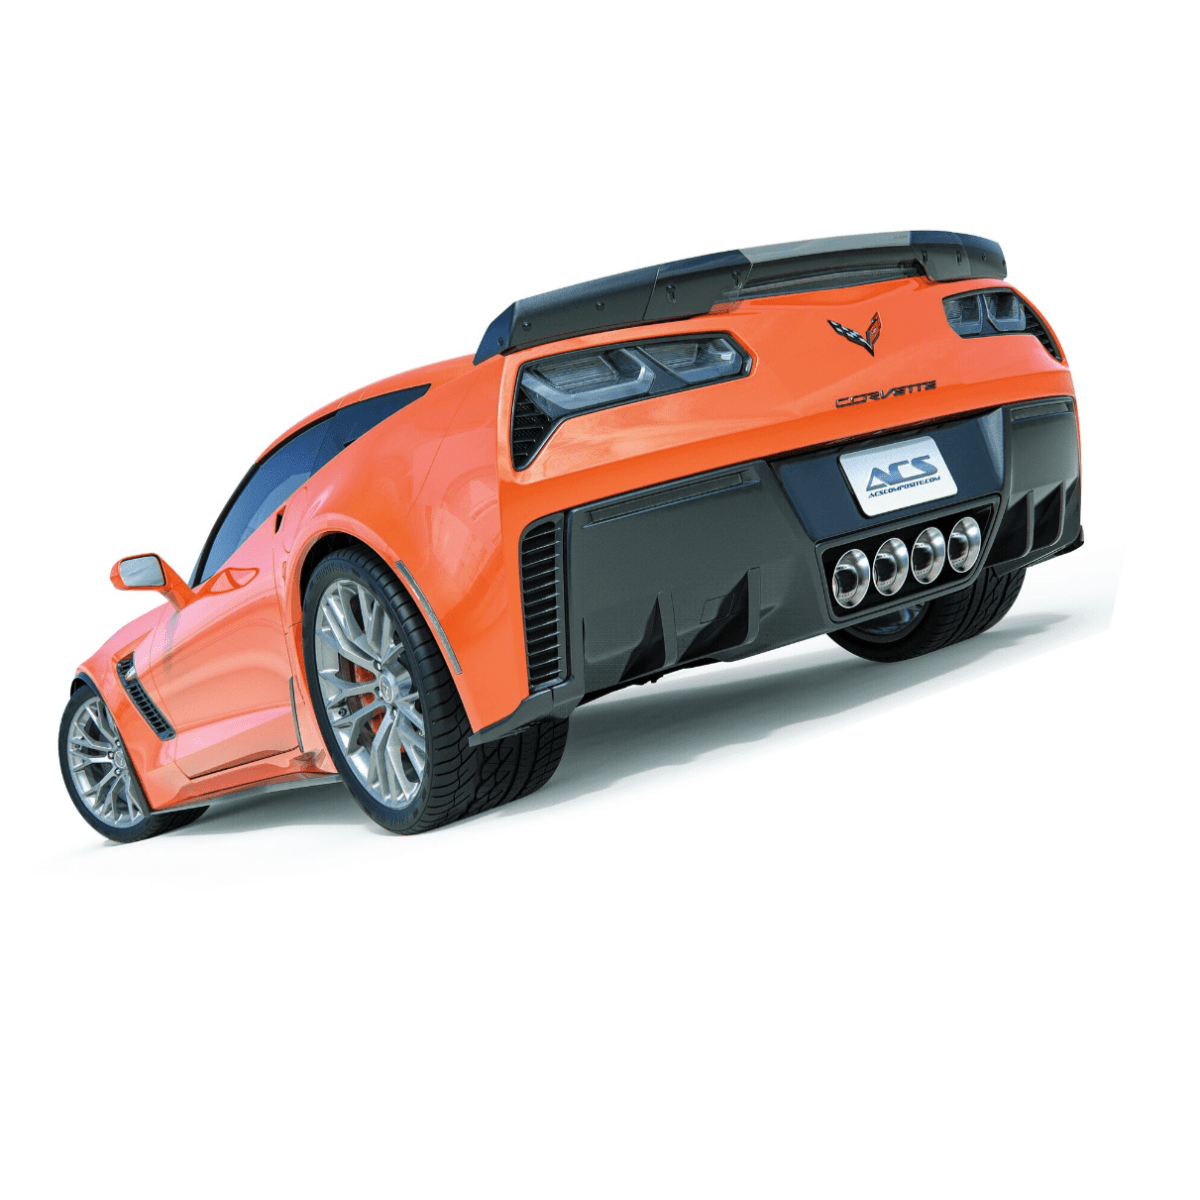 ACS Composite Rear Diffuser Fins in Carbon Flash Black for C7 Corvette (45-4-097 CFZ) - 2x2 fins to enhance airflow and aerodynamics.